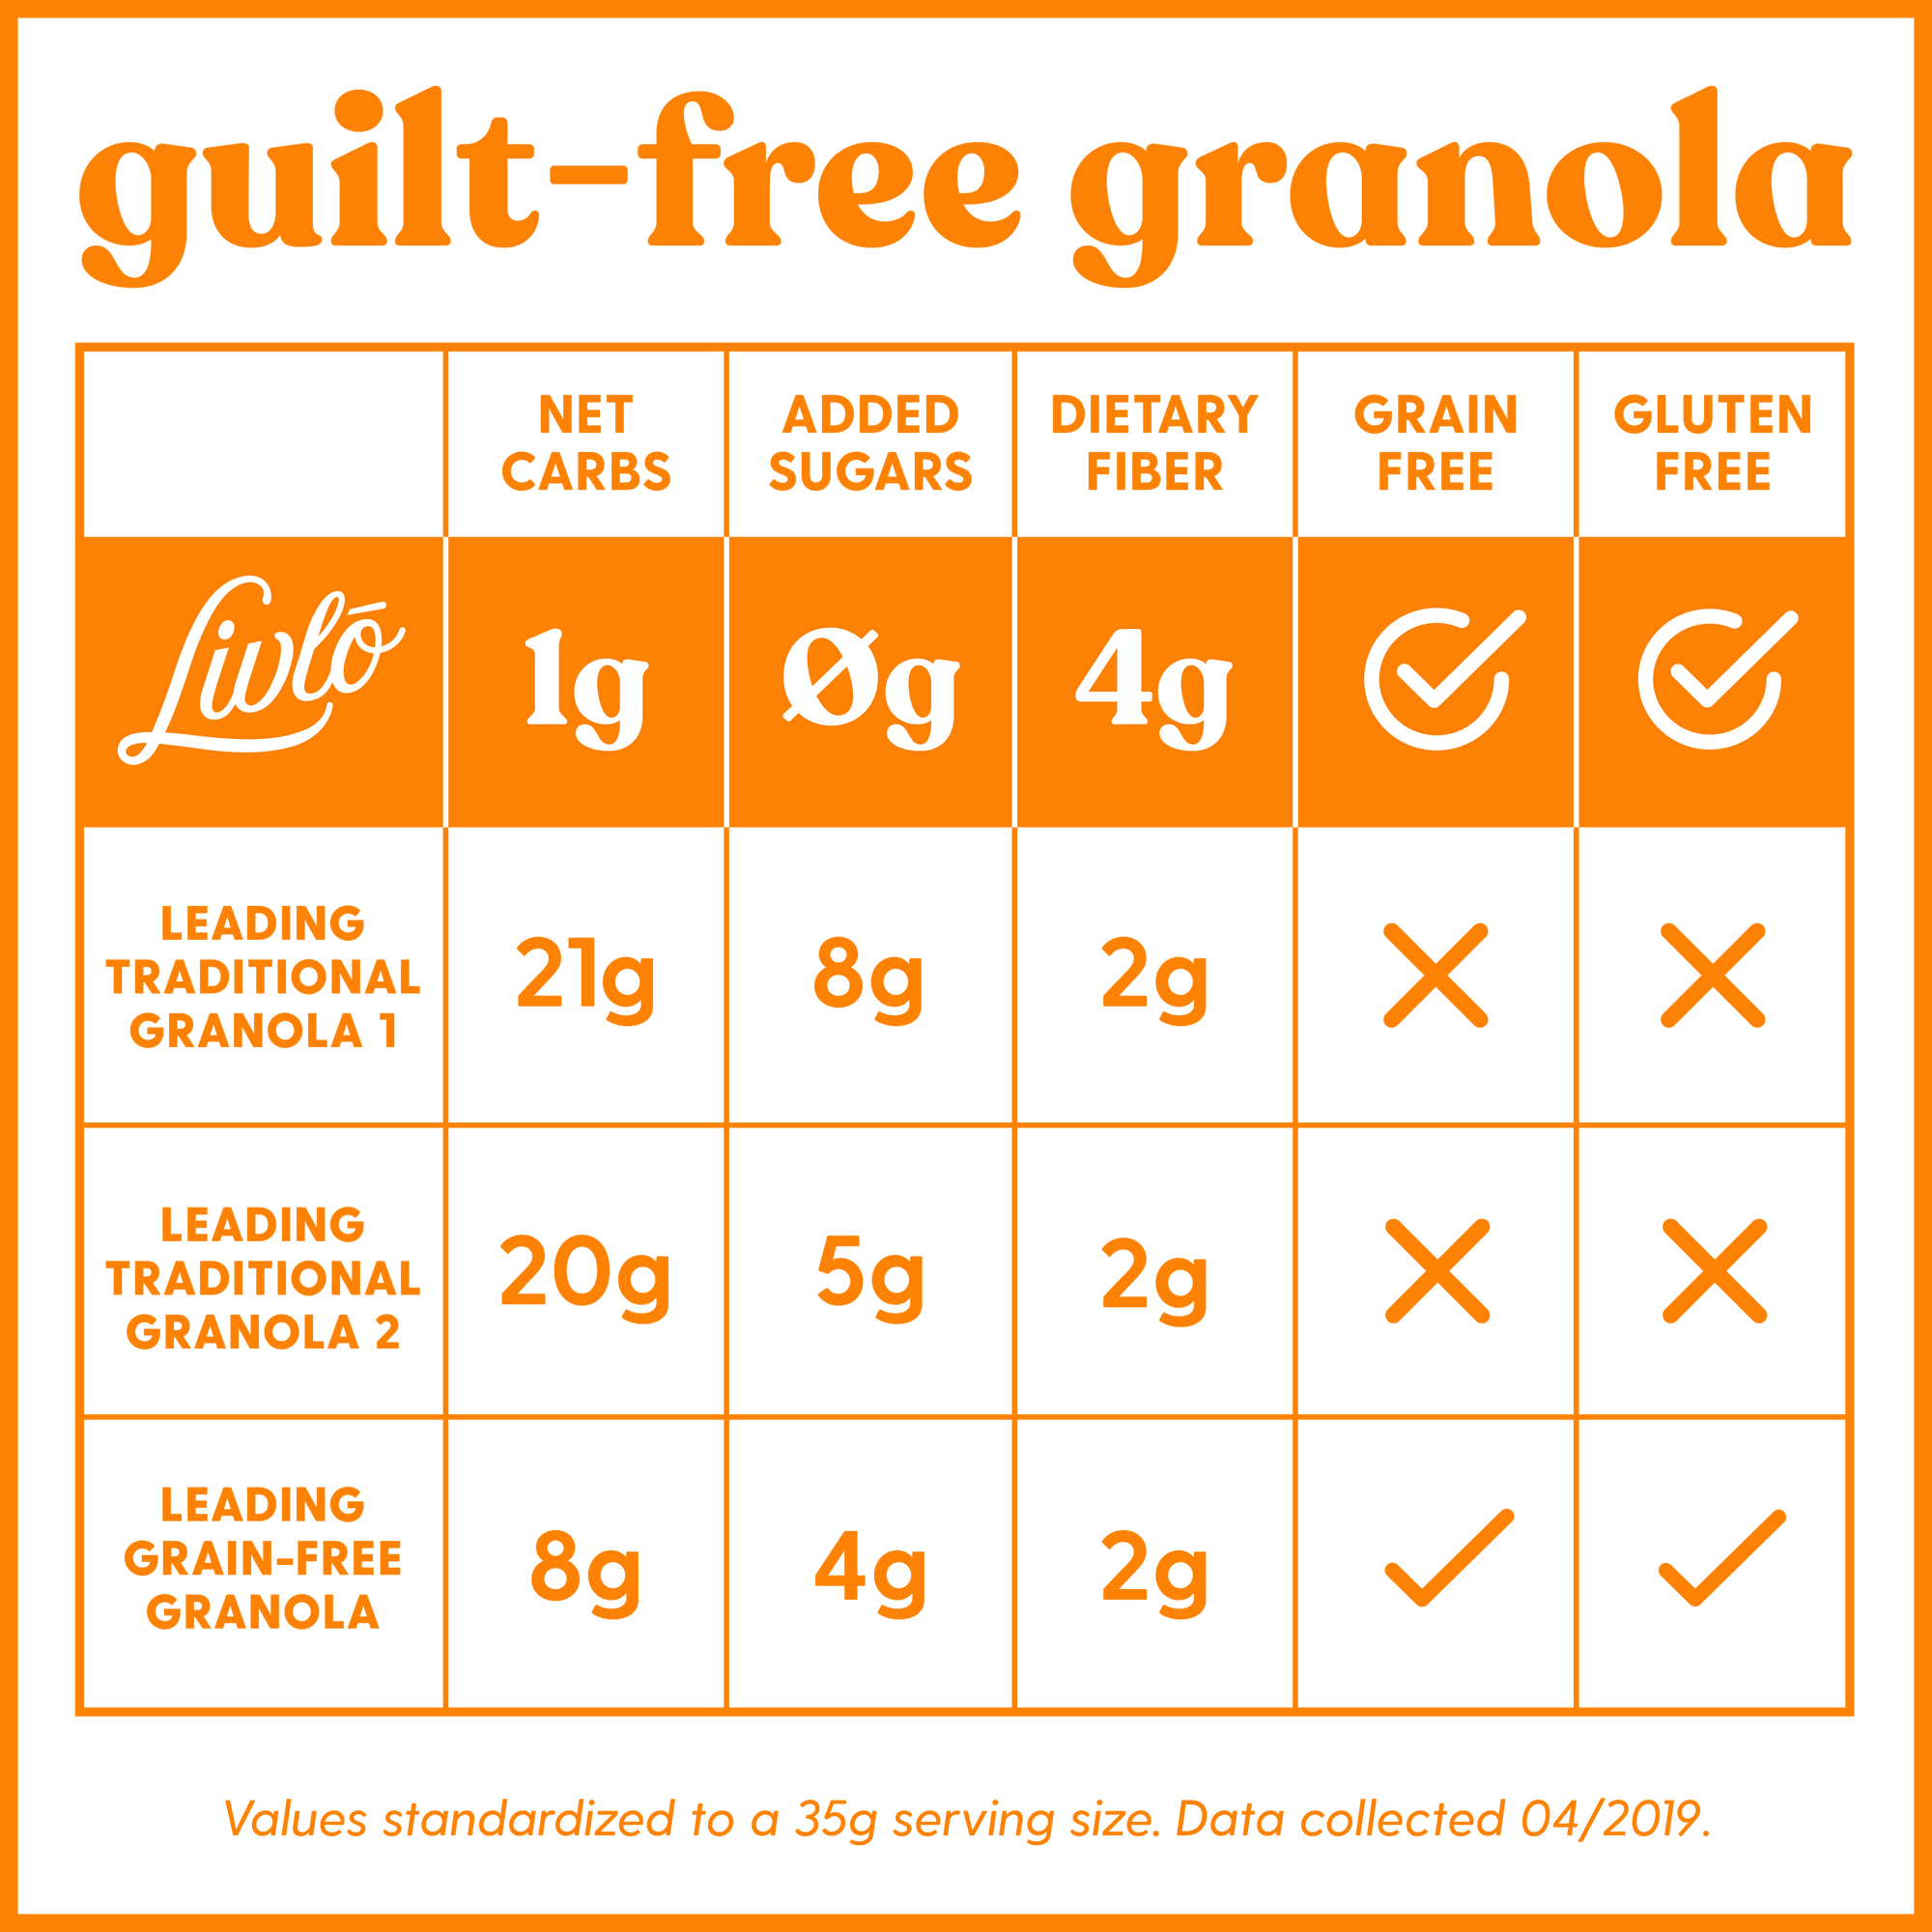 Livlo guilt free granola